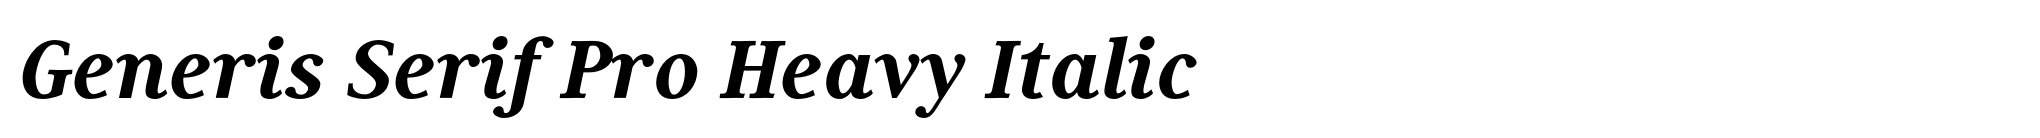 Generis Serif Pro Heavy Italic image